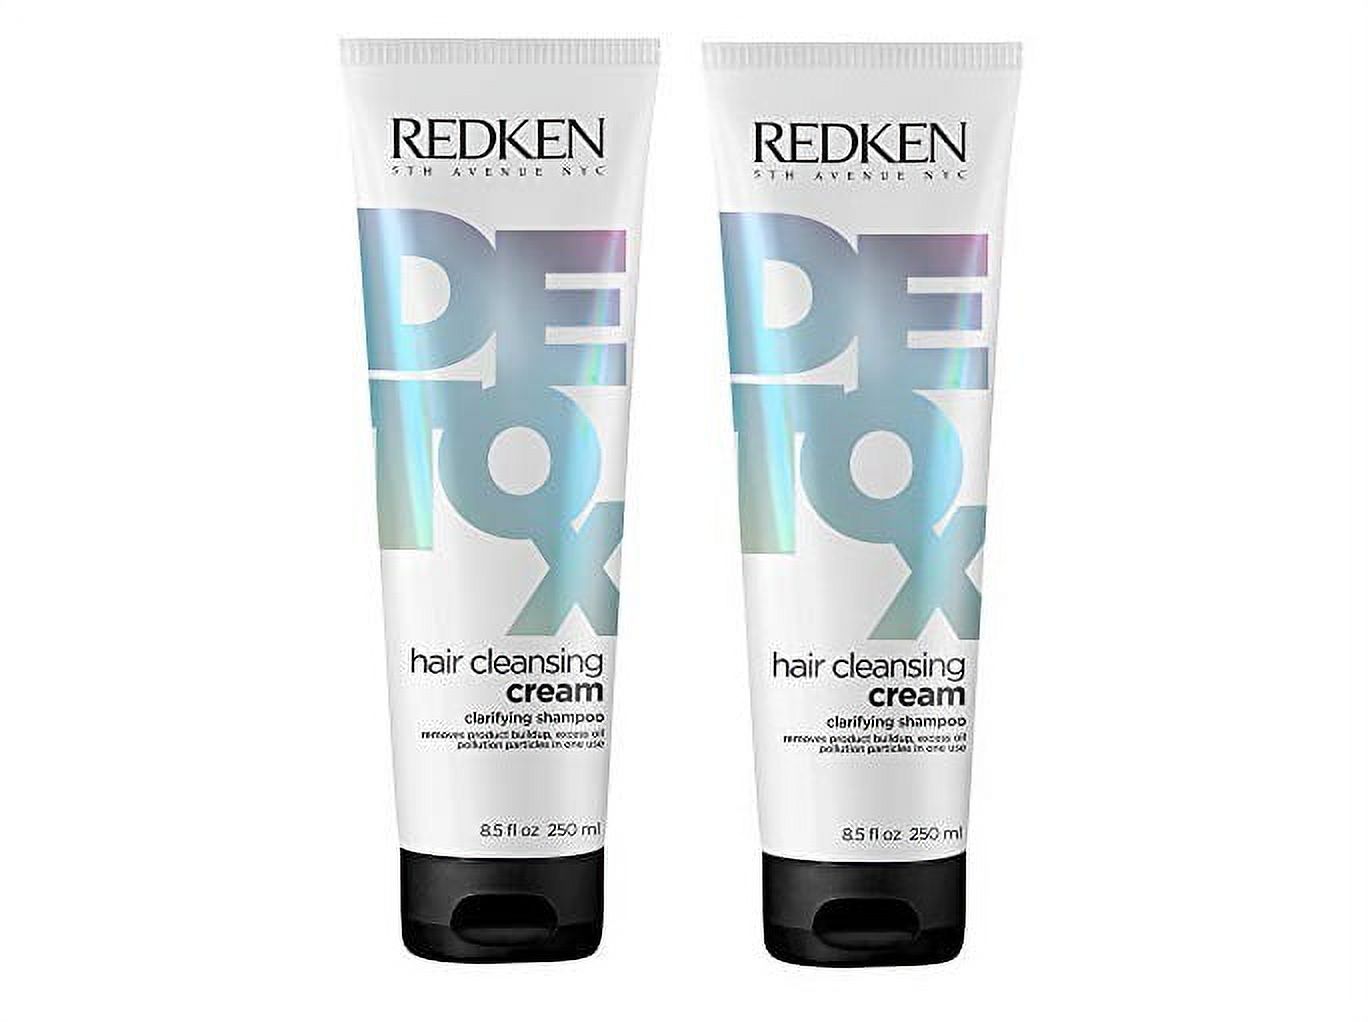 Redken Detox Hair Cleansing Cream Clarifying Shampoo 8.5 Oz - 2 Pack - image 2 of 2